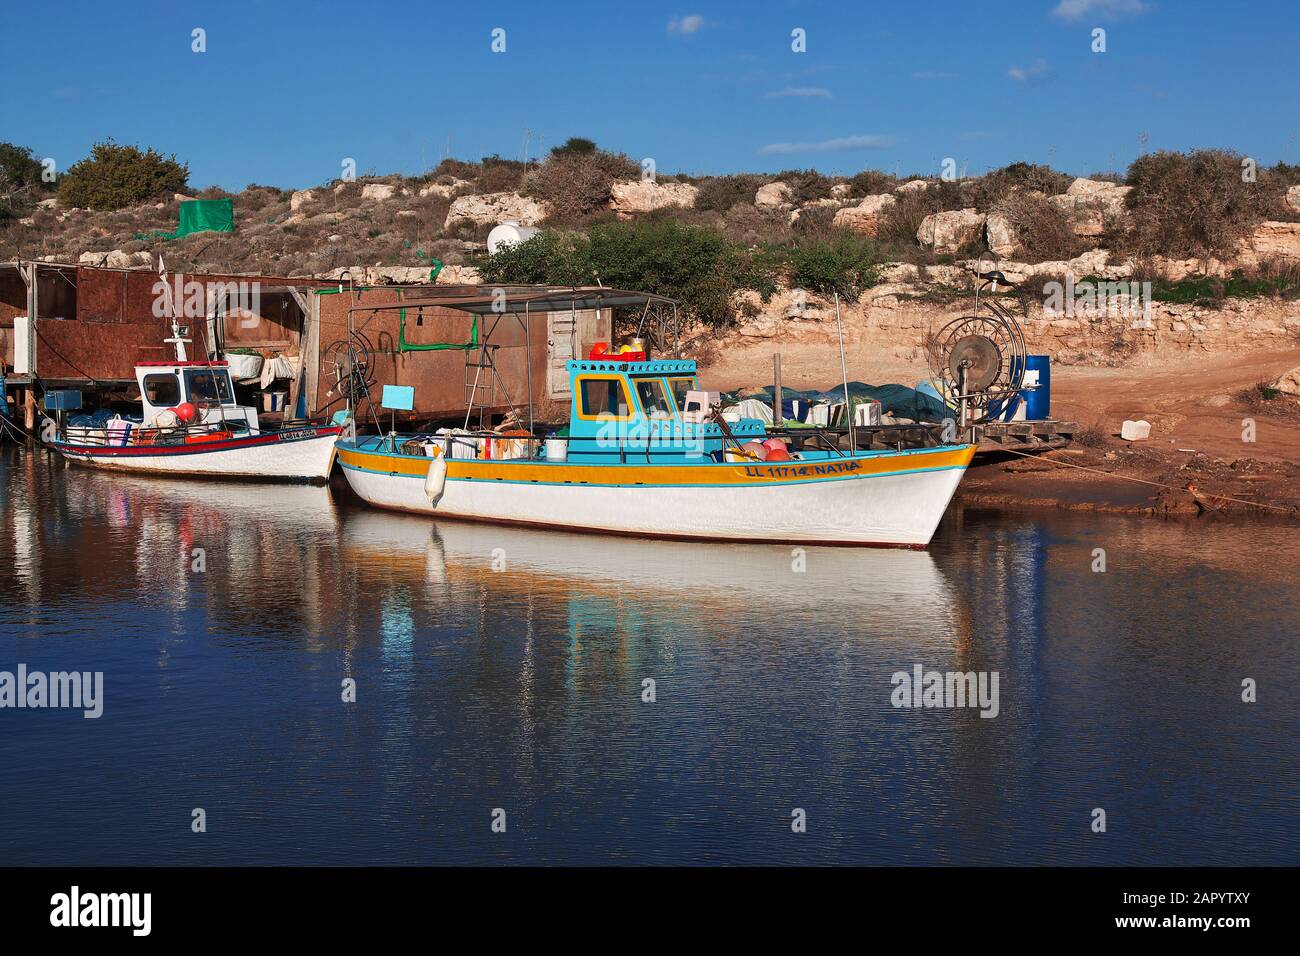 Potamos village/Cyprus - 08 Jan 2016: Boats in Potamos village, Cyprus Stock Photo